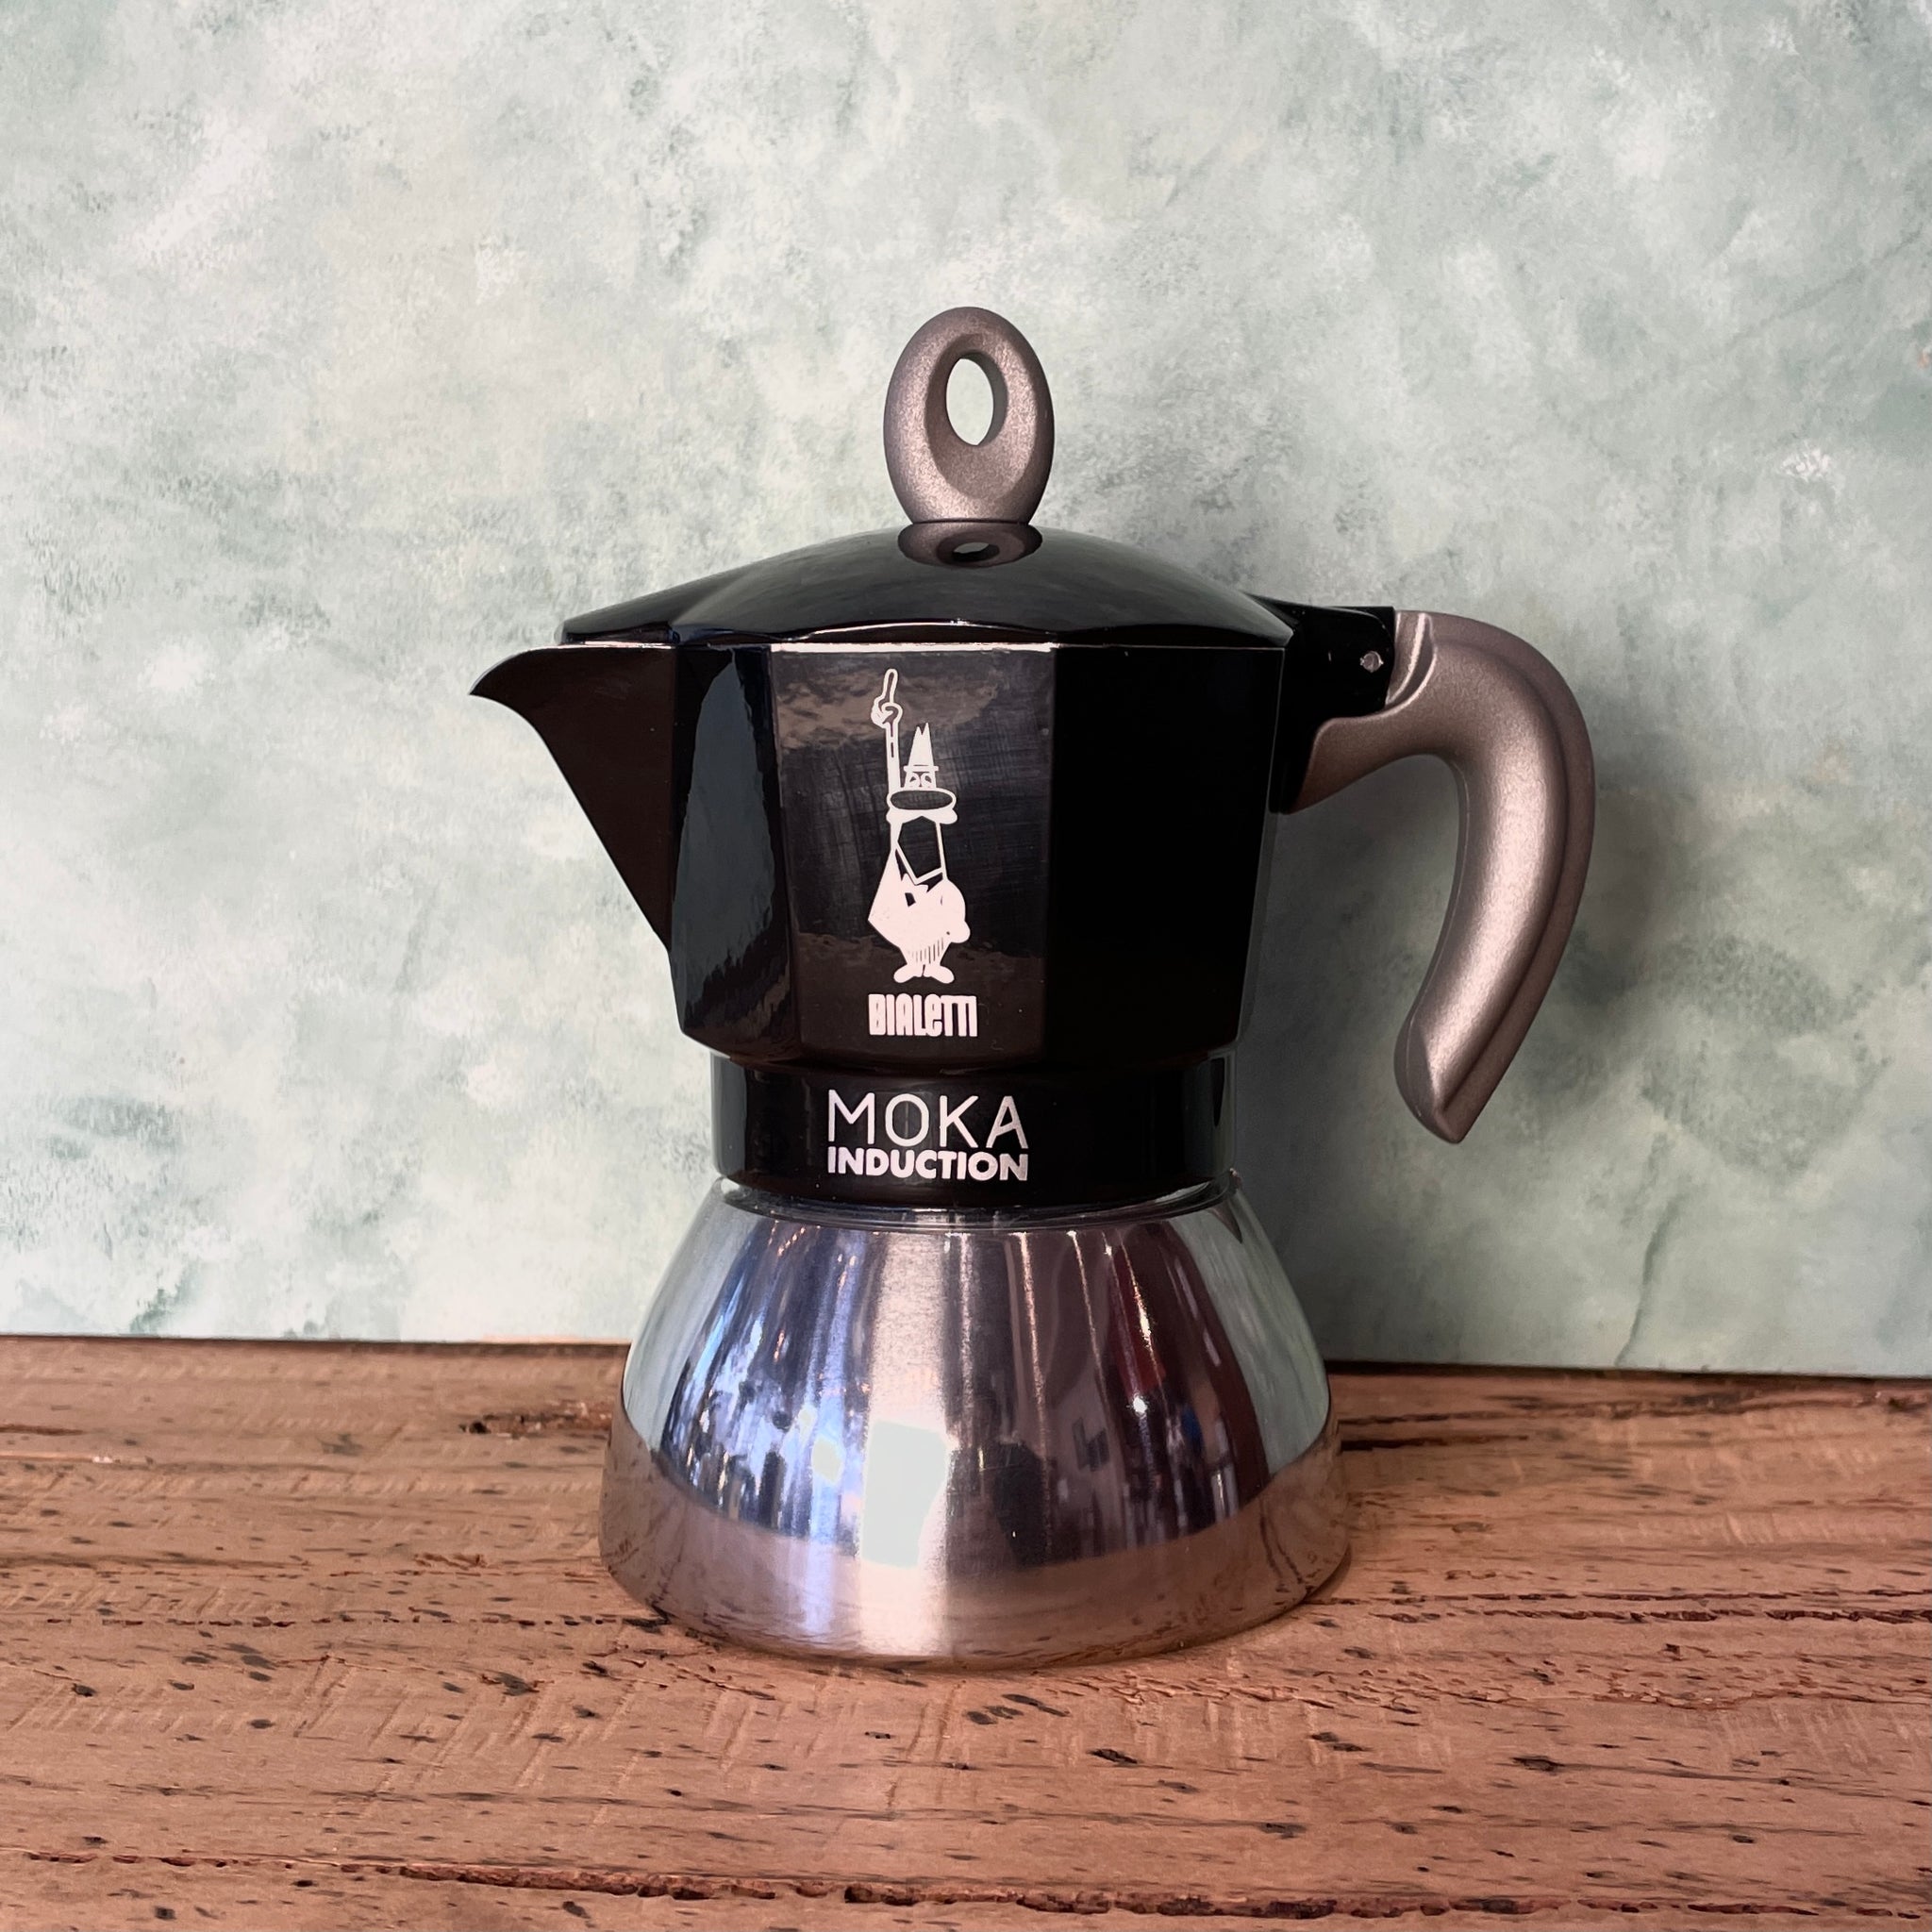 Bialetti Moka Induction Espresso Pot Black 4 Cups